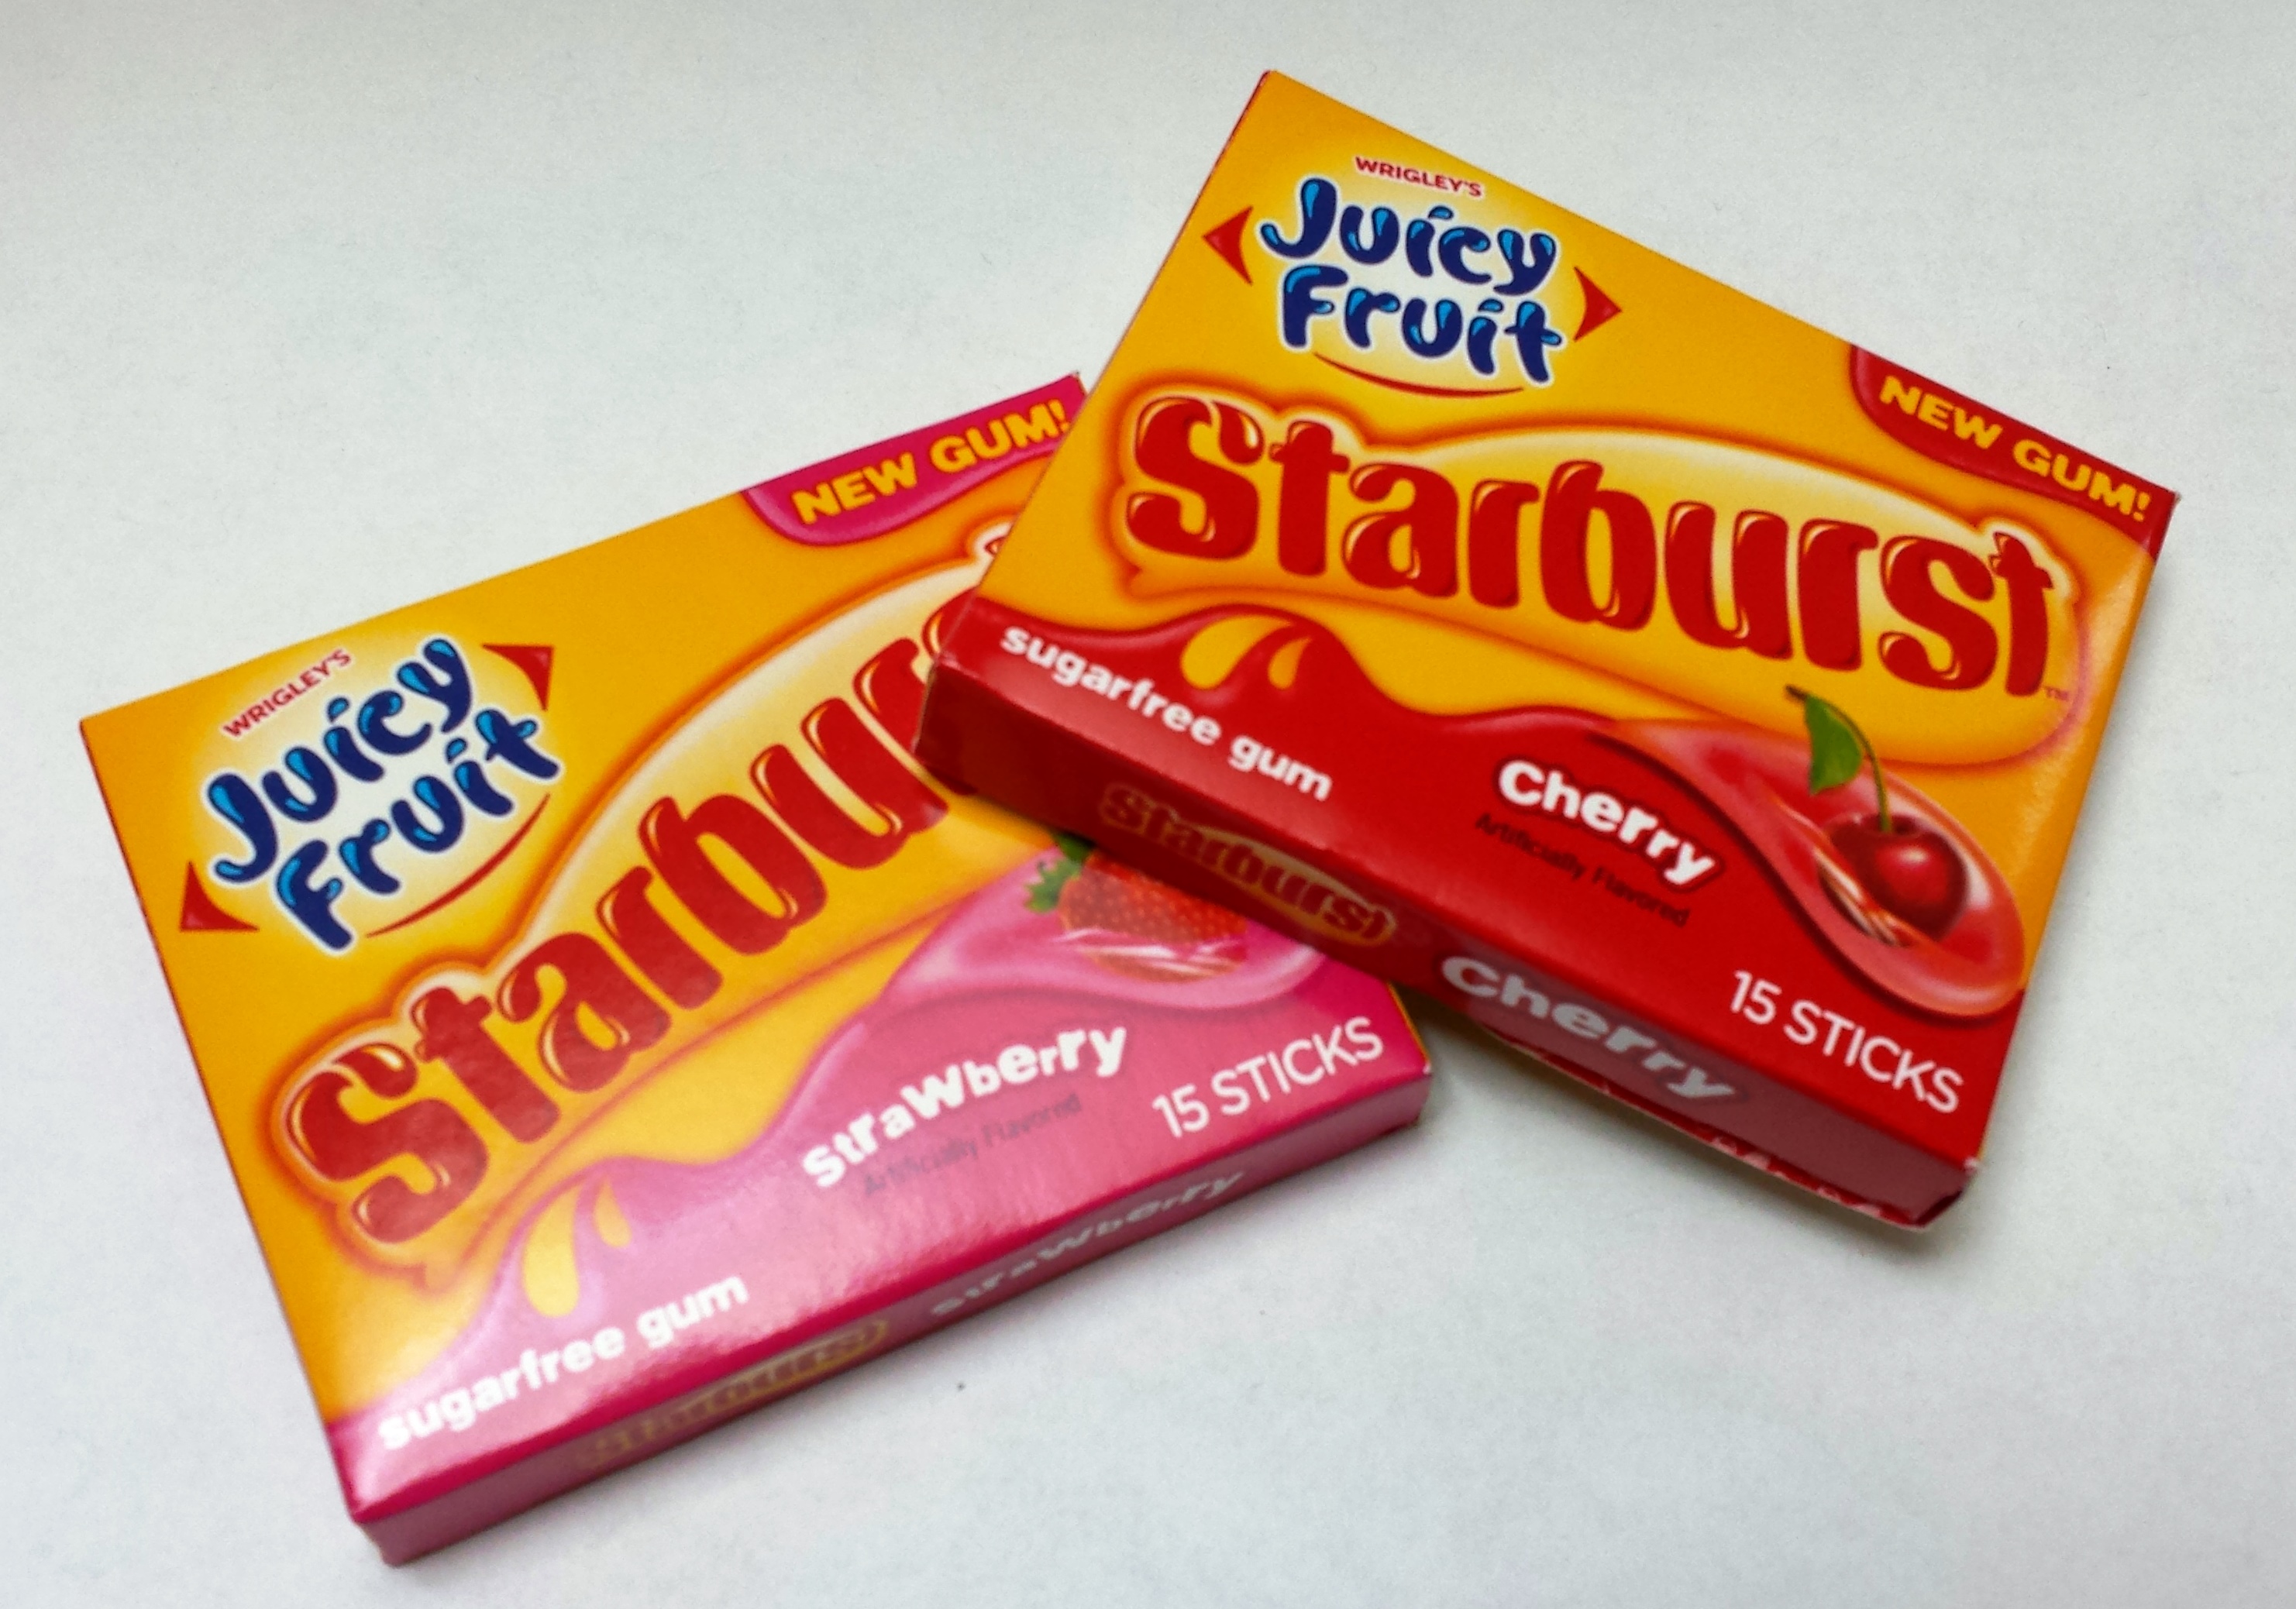 Juicy Fruit Starburst Gum Review The Gum Blog.